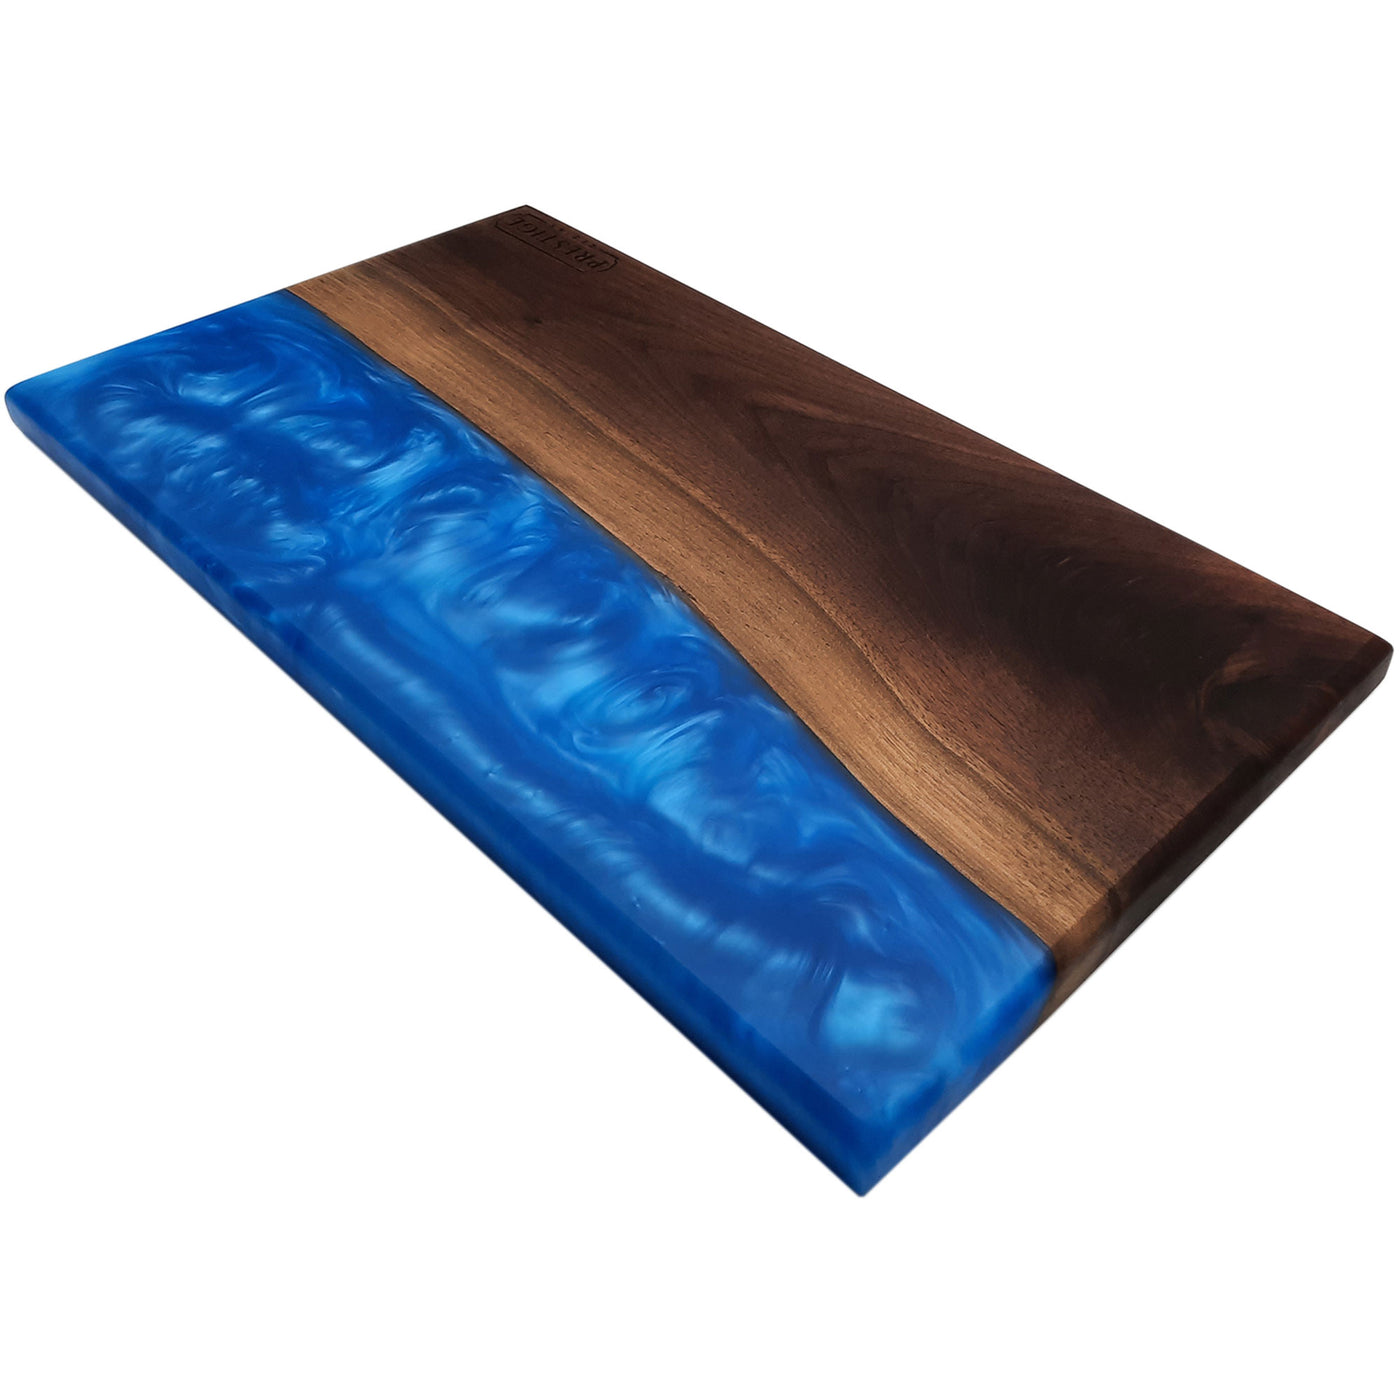 Maple Epoxy Charcuterie board #size_9-x-17-Inches#thickness_1-5-inches#color_black-walnut-metallic-blue